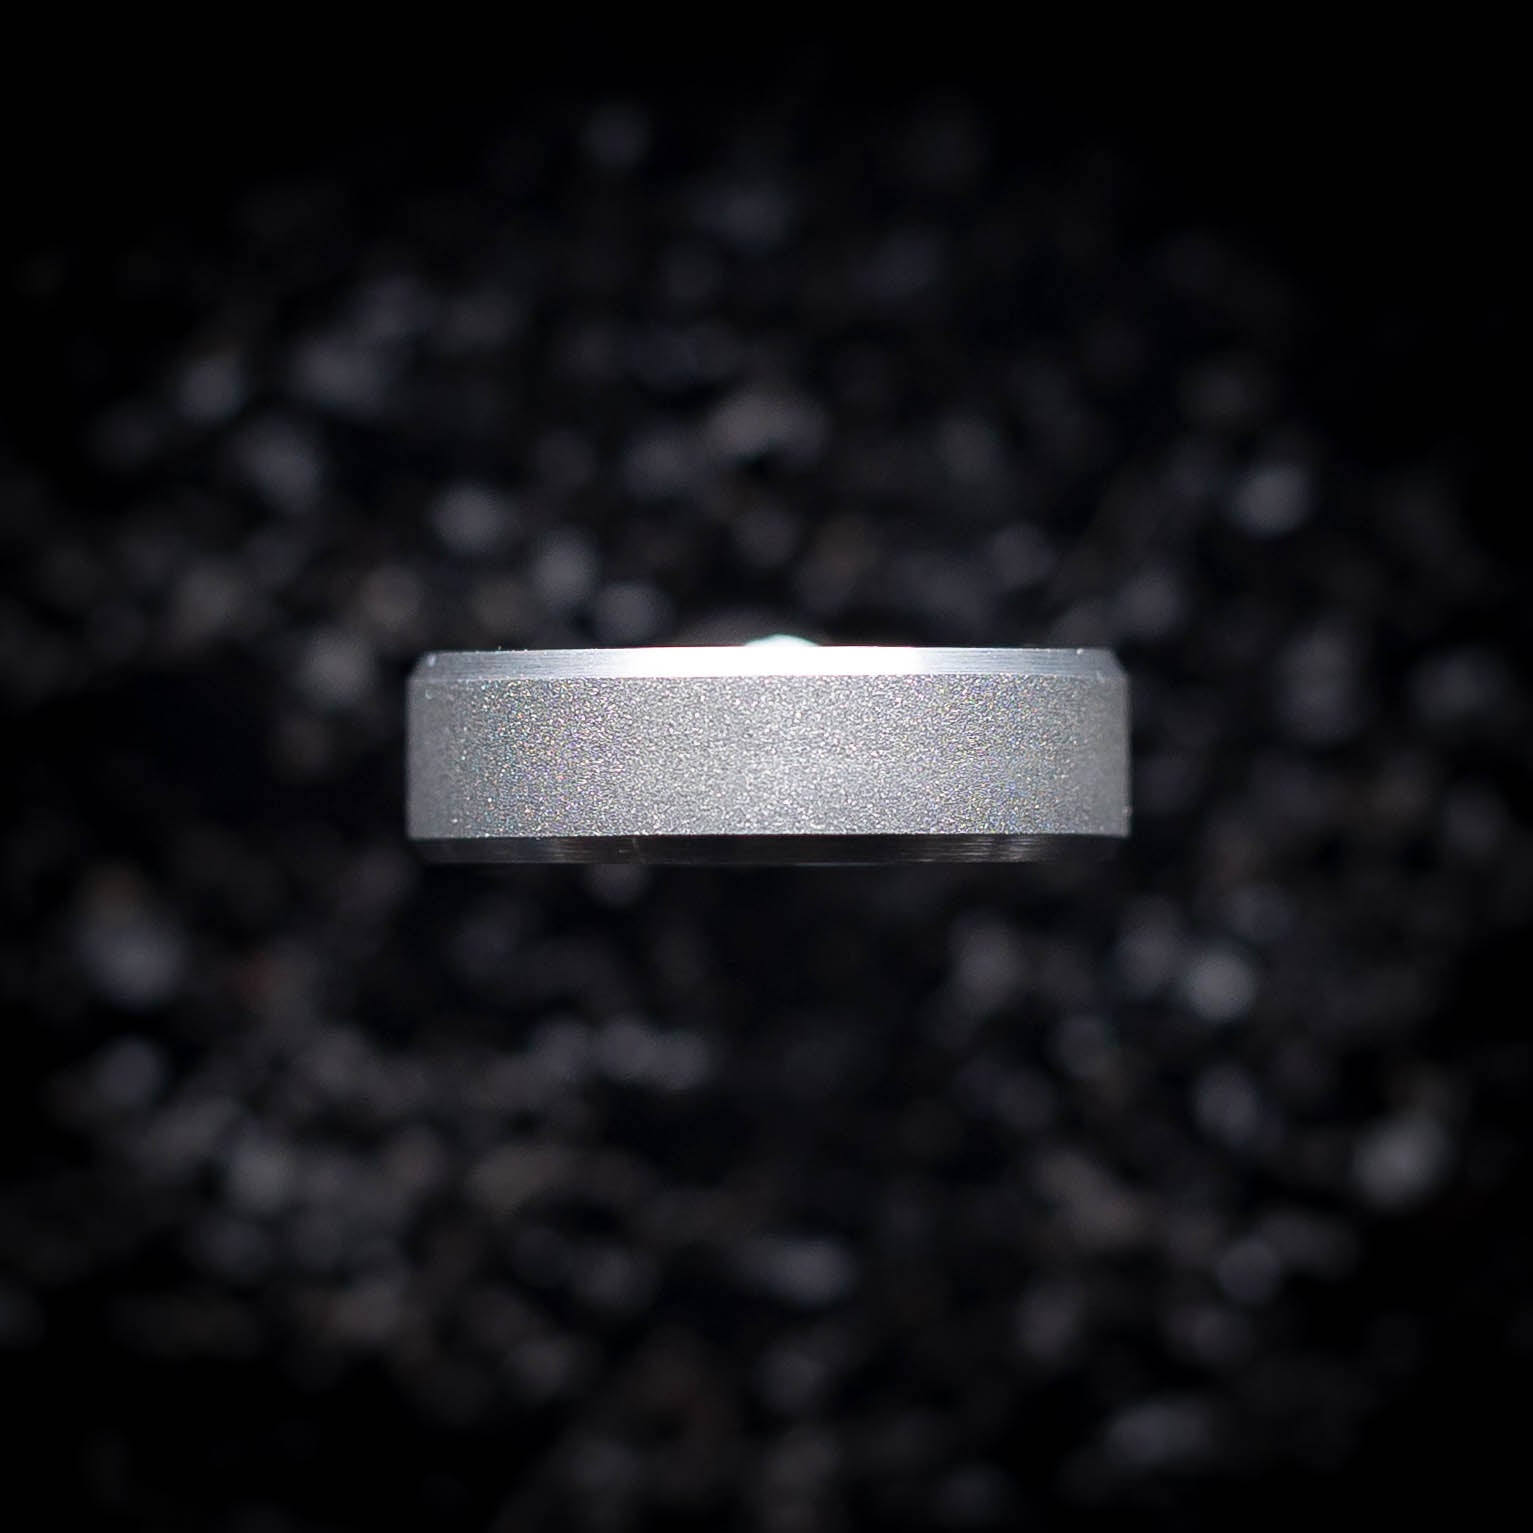 The Minimalist - Sandblasted Men's Tungsten Ring